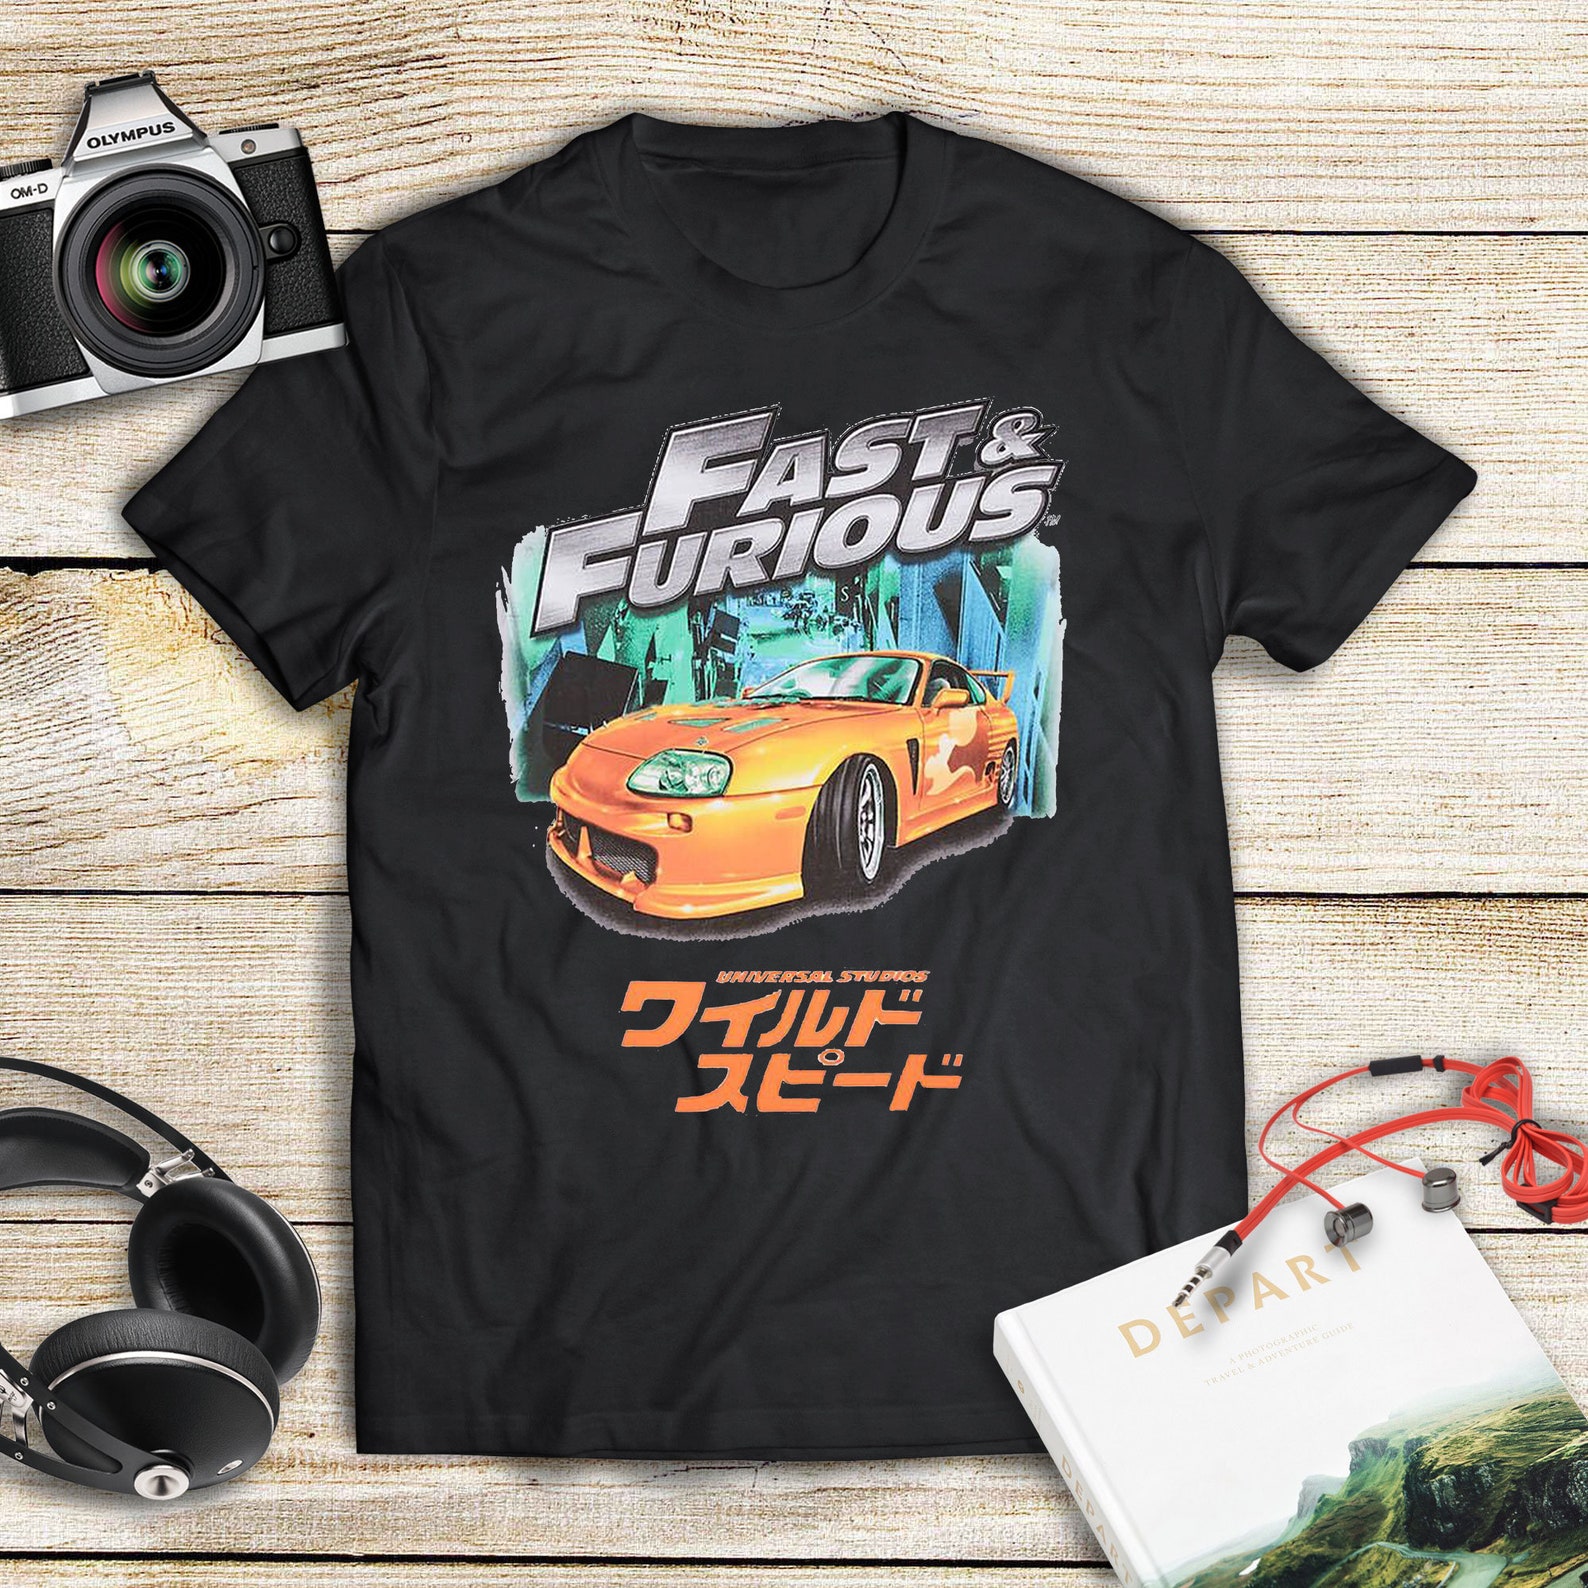 Fast & Furious Graphic Shirt Racing Car Shirt Unisex T-Shirt | Etsy